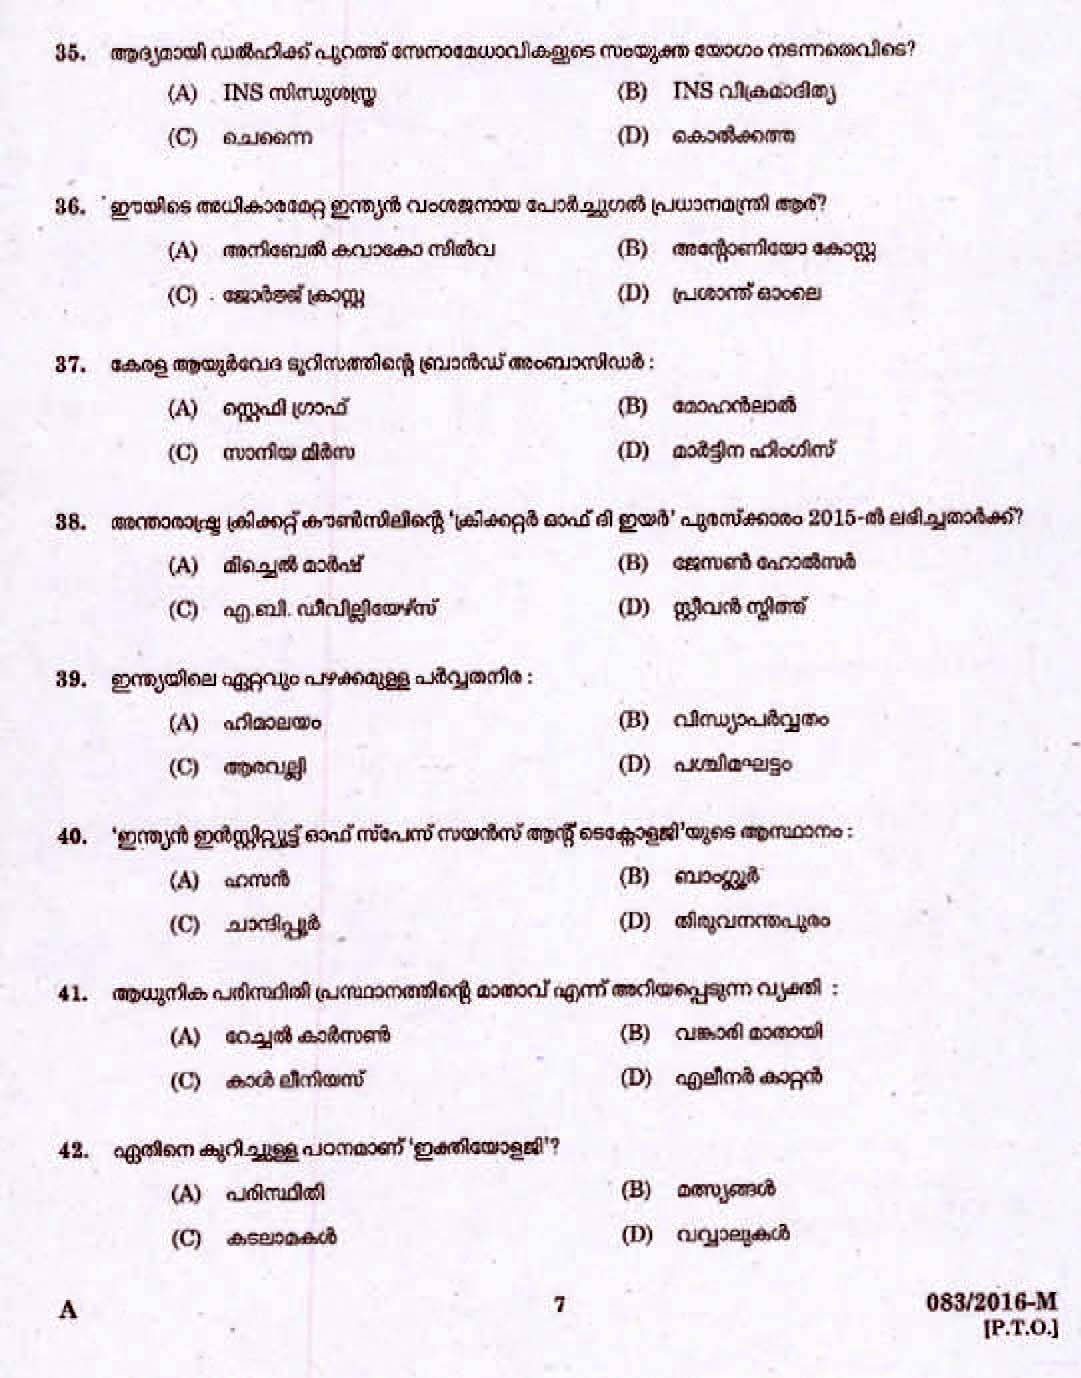 Kerala PSC Statistical Assistant Grade II OMR Exam 2016 Question Paper Code 0832016 M 5